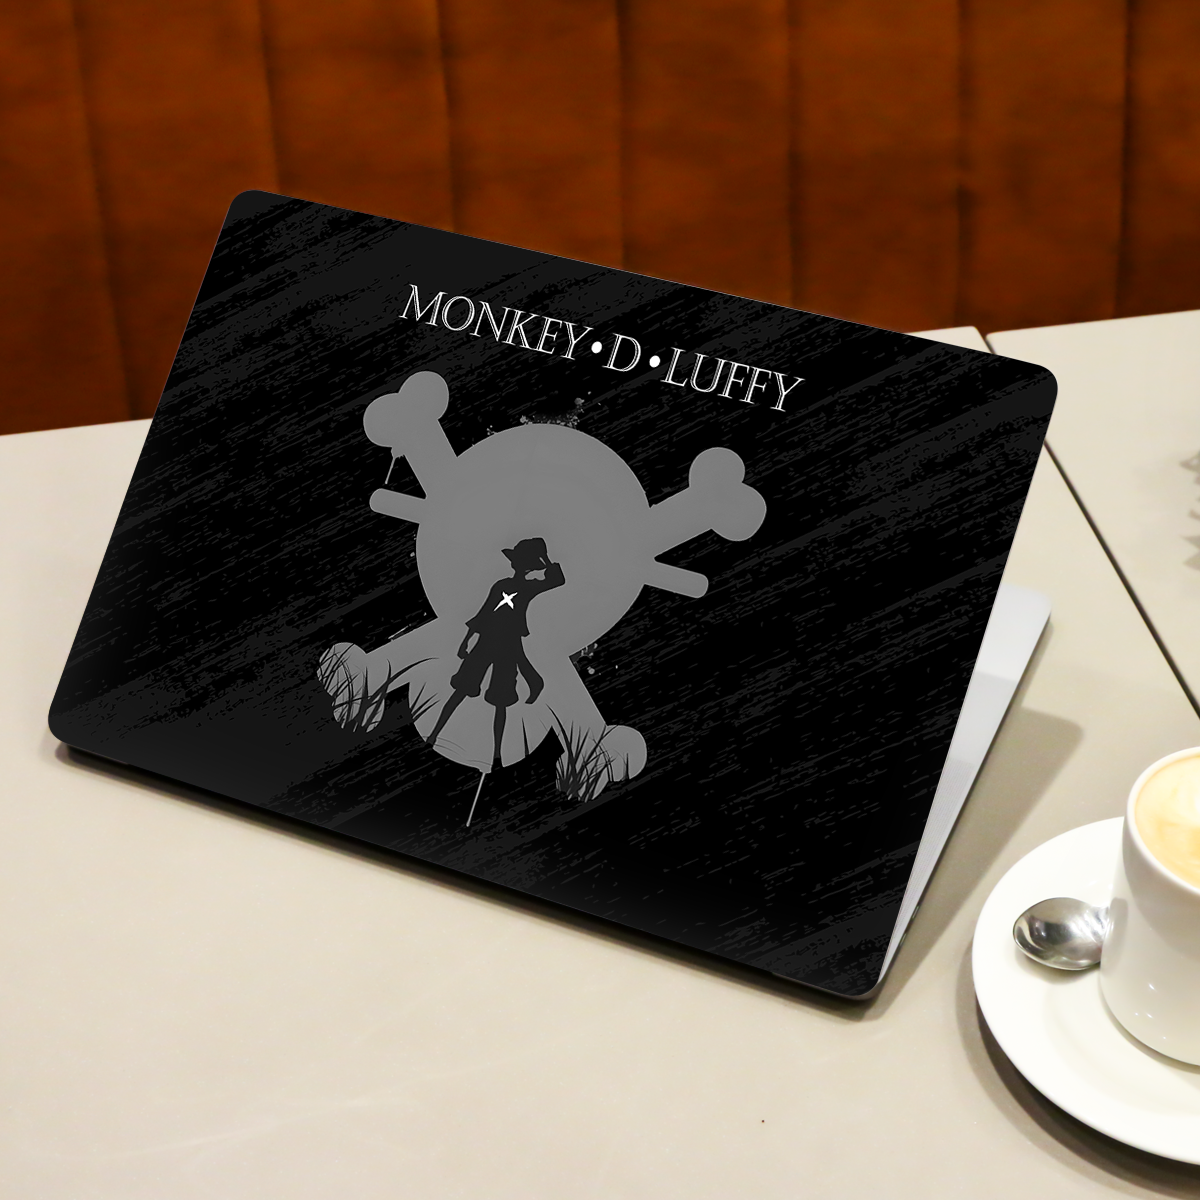 Monkey D Luffy Anime Laptop Skin